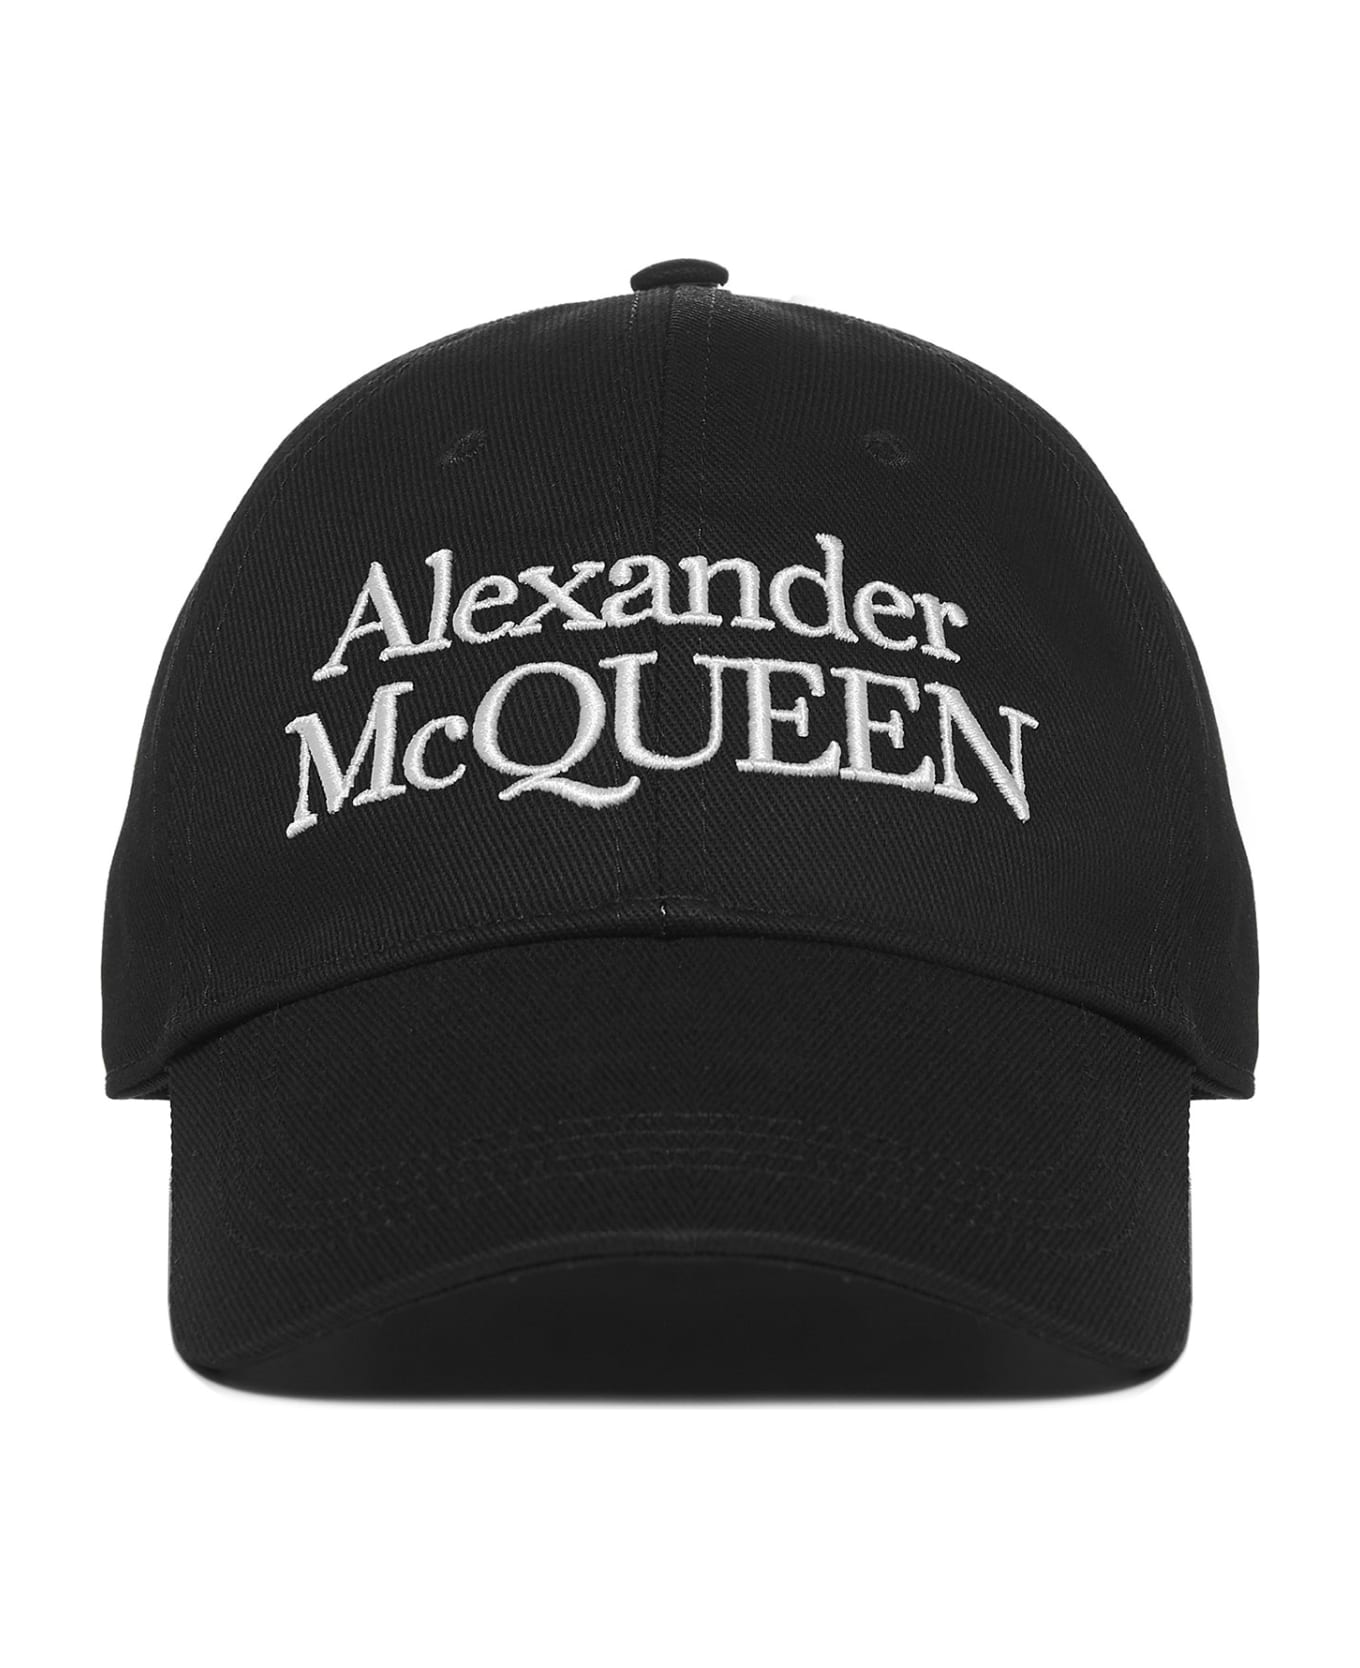 Alexander McQueen Stacked Hat - Black/ivory 帽子